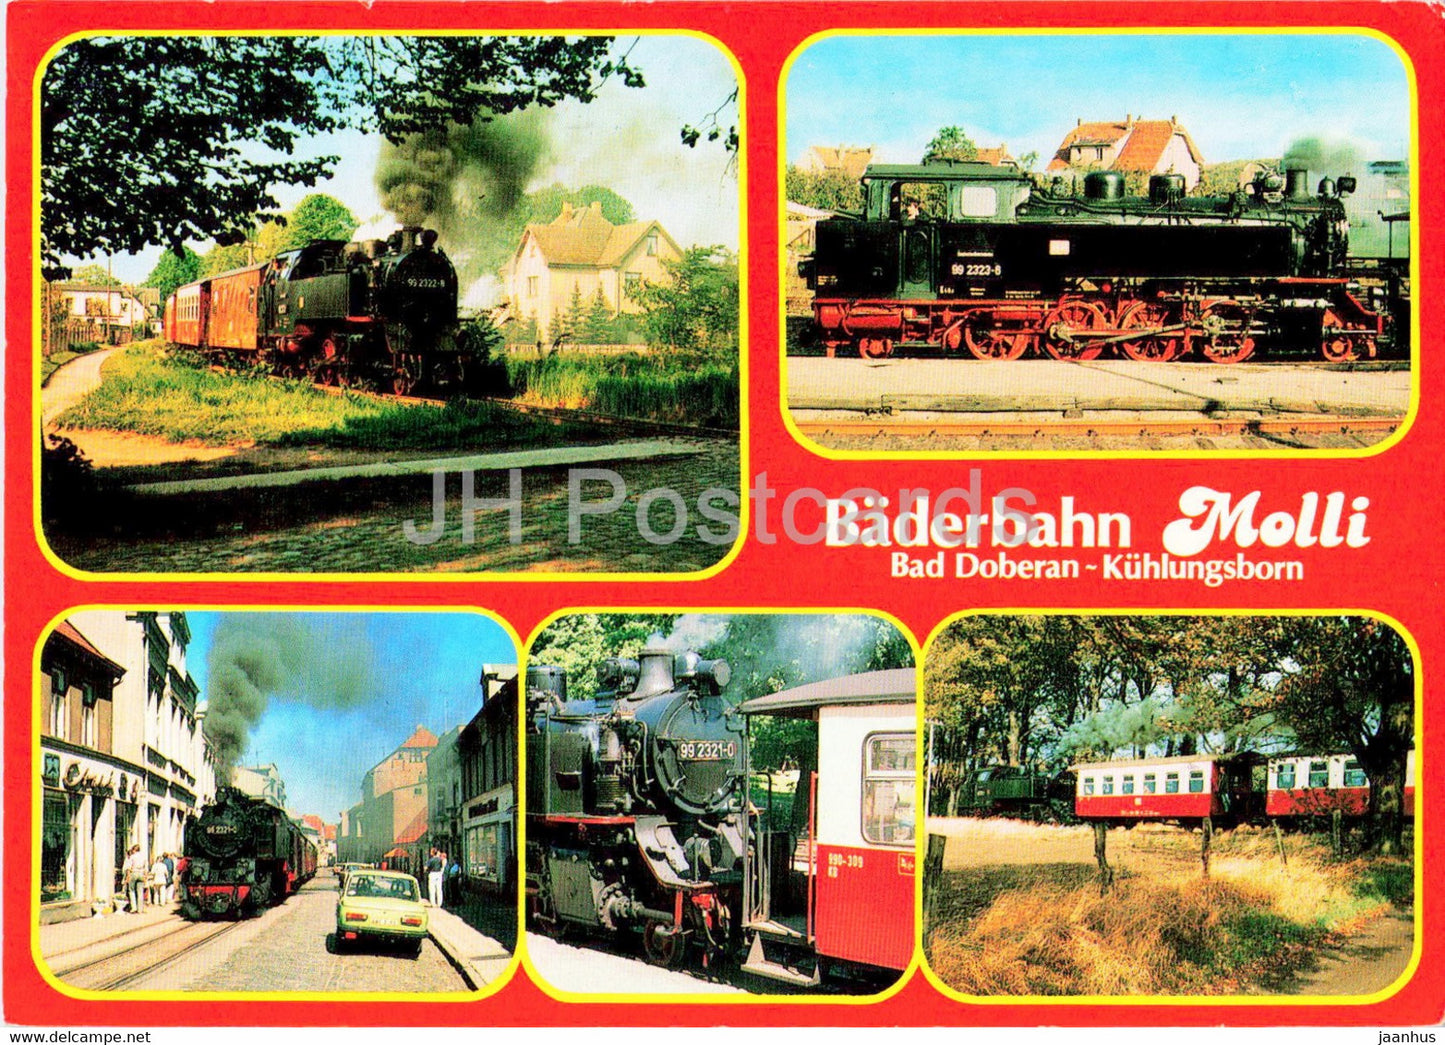 Baderbahn Molli - Bad Doberan - Kuhlungsborn - train - railway - locomotive - 1994 - Germany - used - JH Postcards